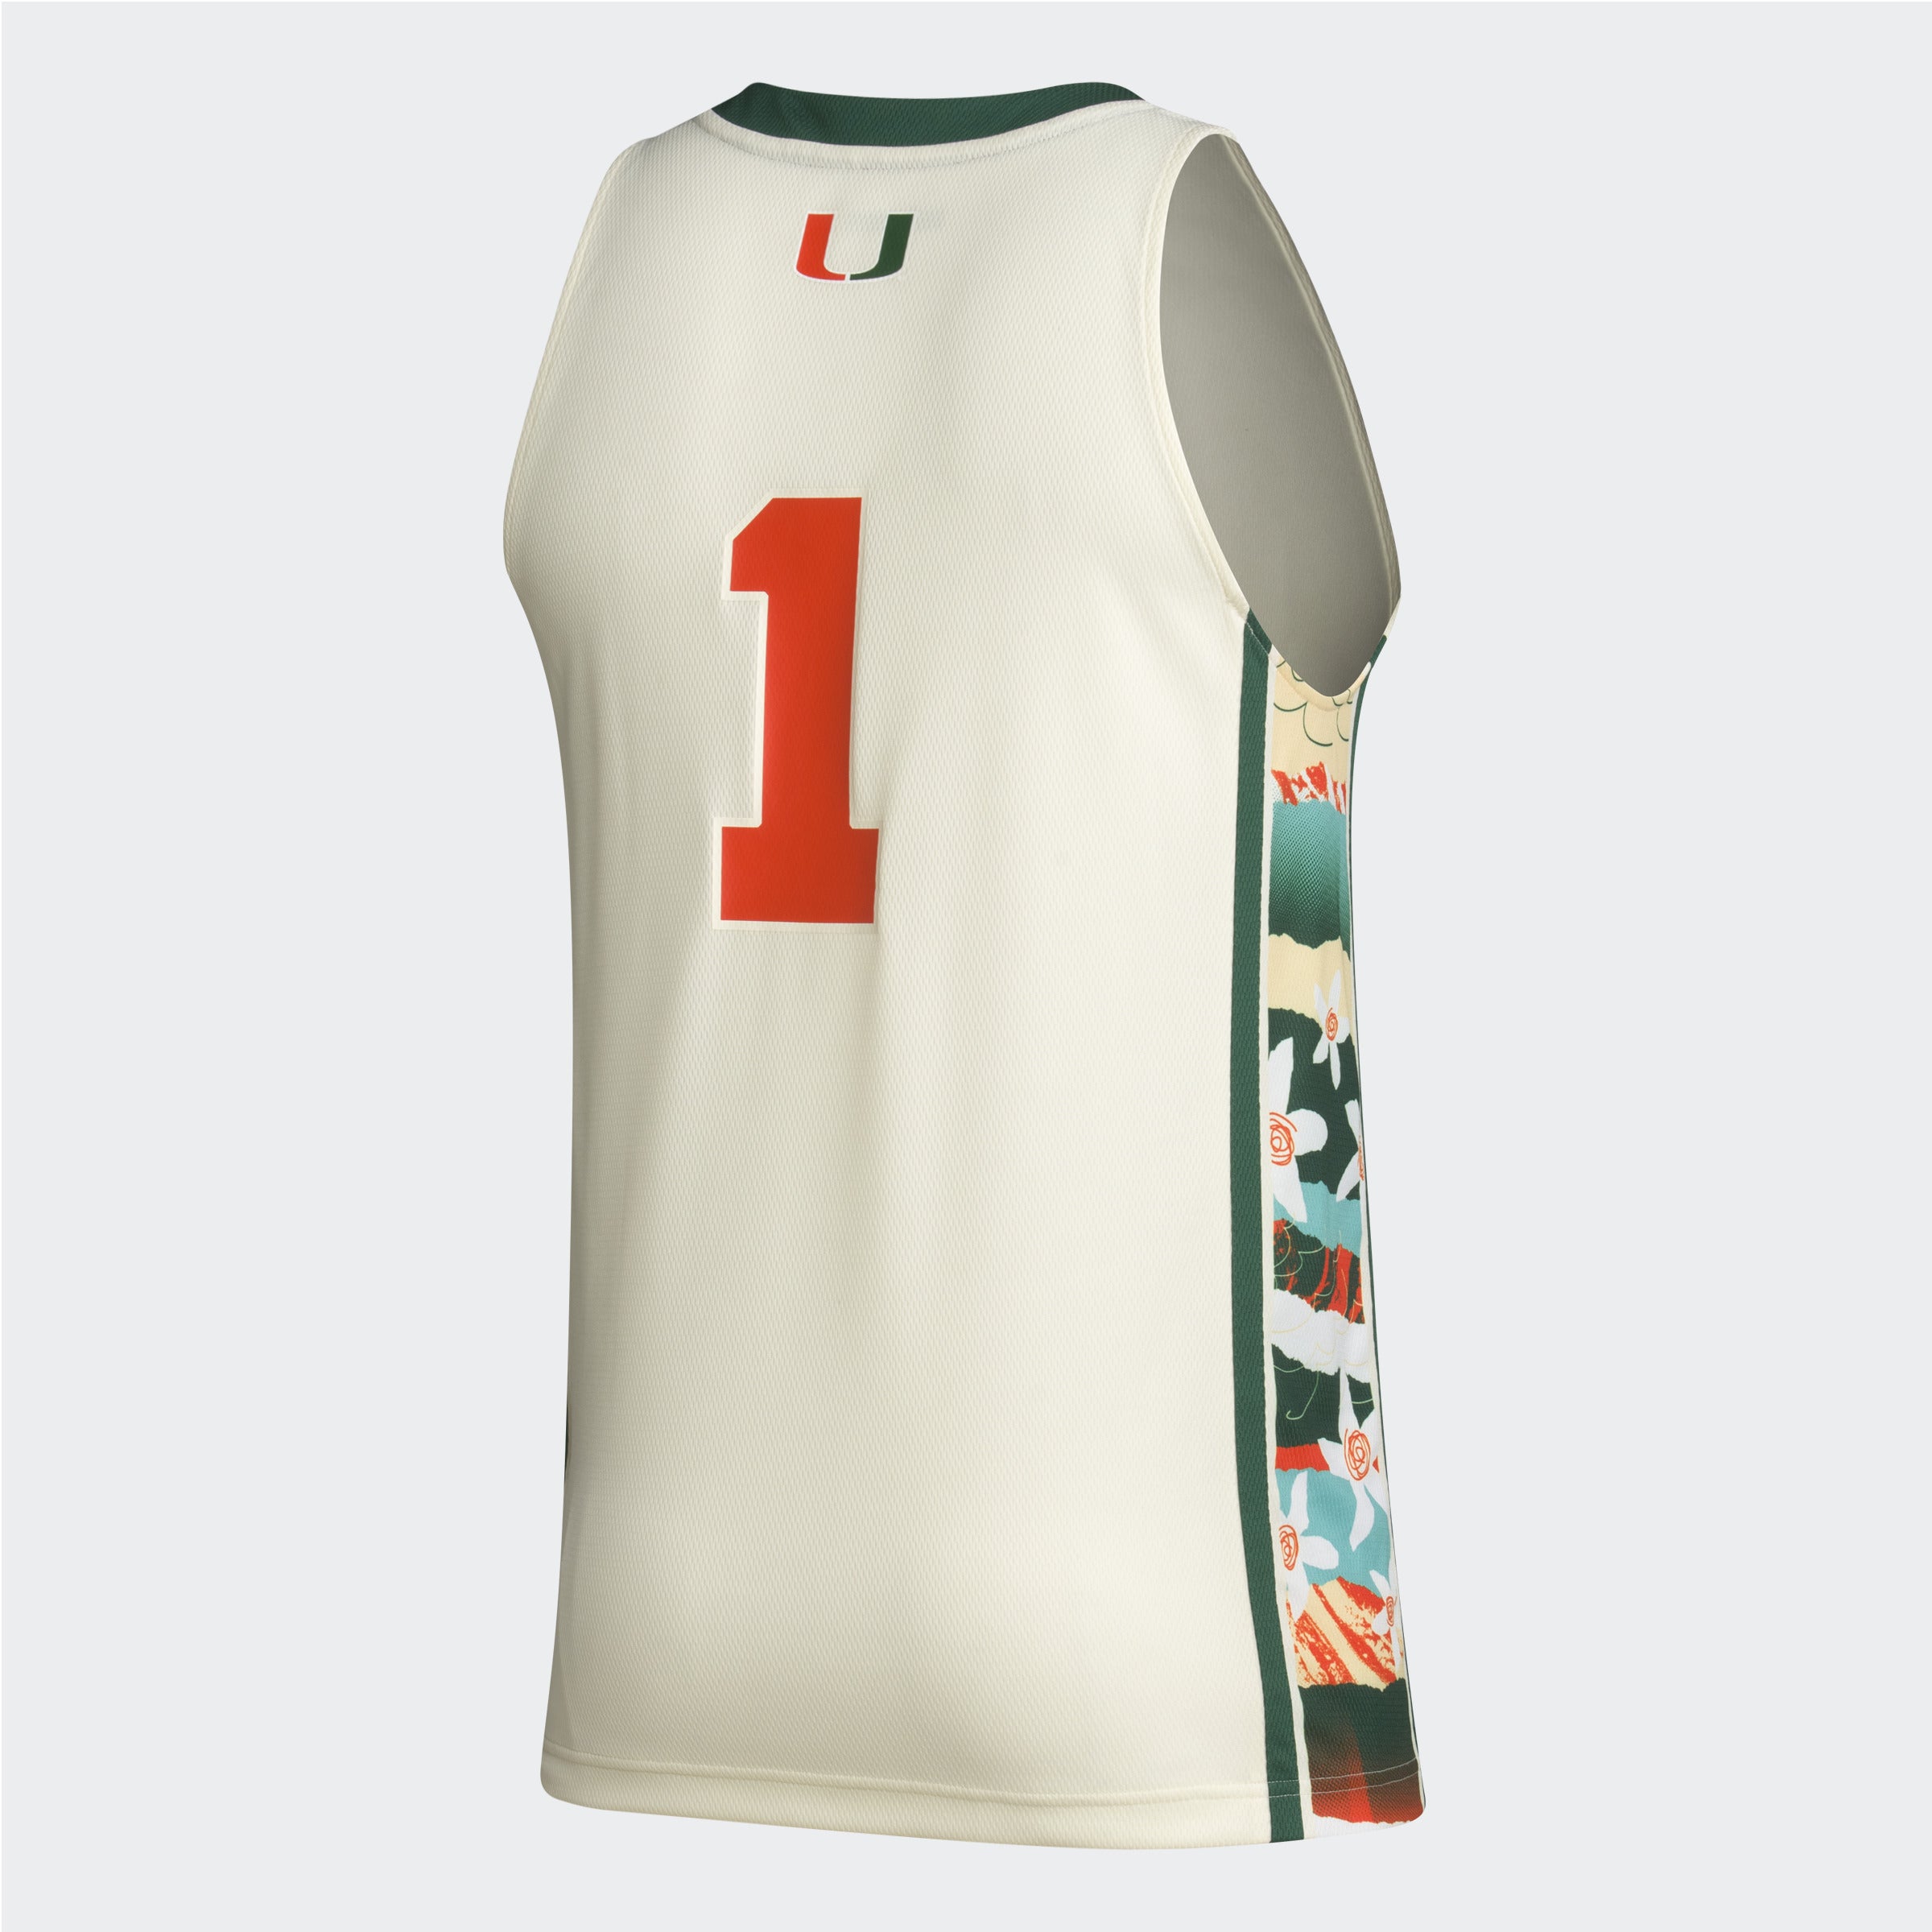 Adidas Men's Miami Hurricanes #1 White Replica Basketball Jersey, XL